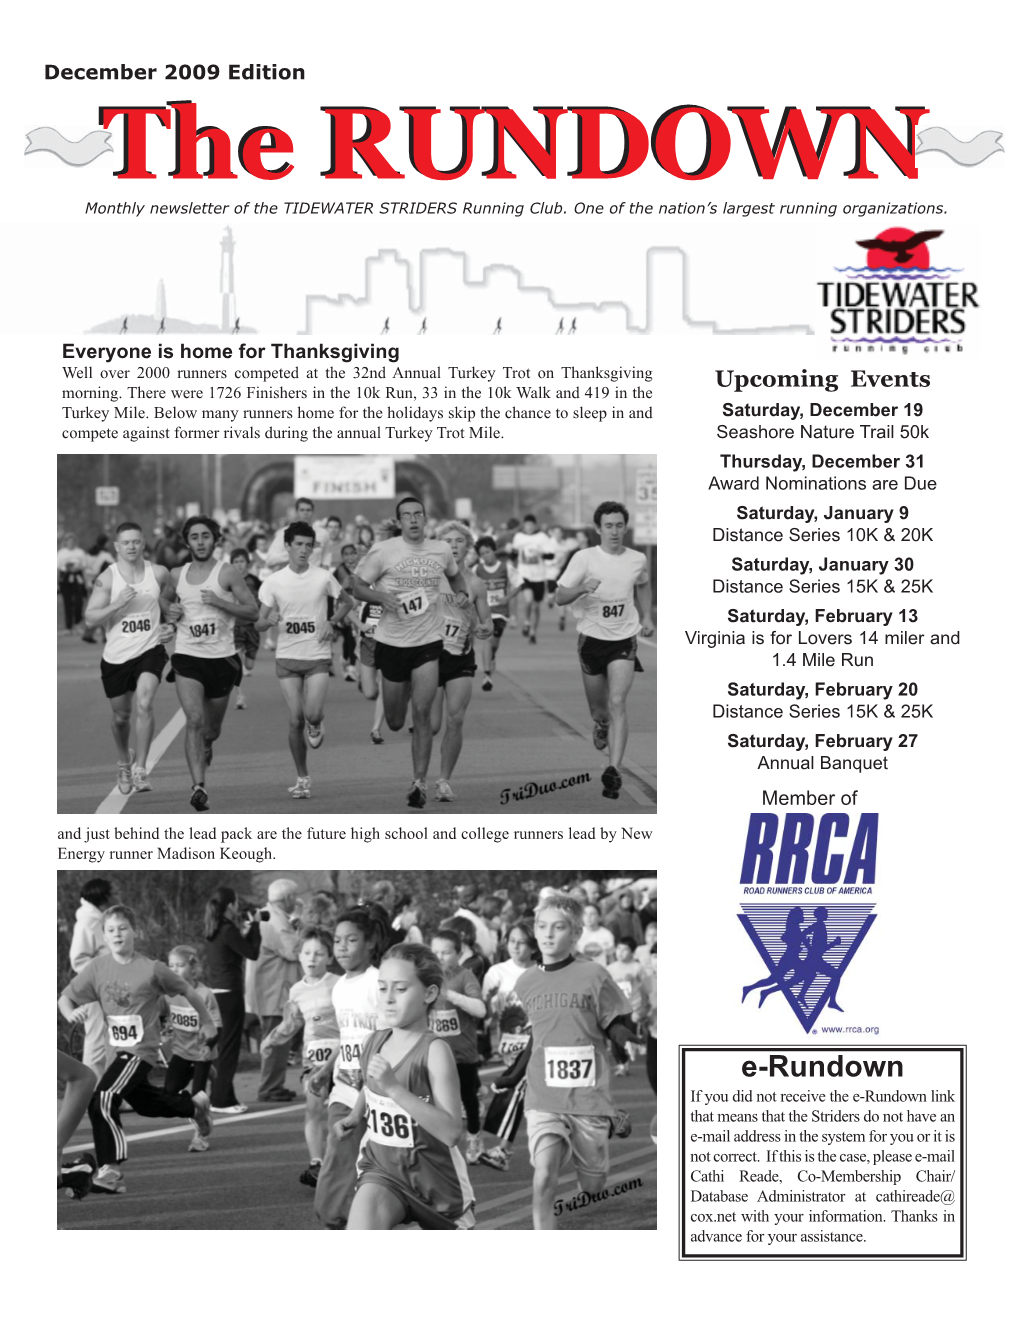 The RUNDOWNRUNDOWN Monthly Newsletter of the TIDEWATER STRIDERS Running Club